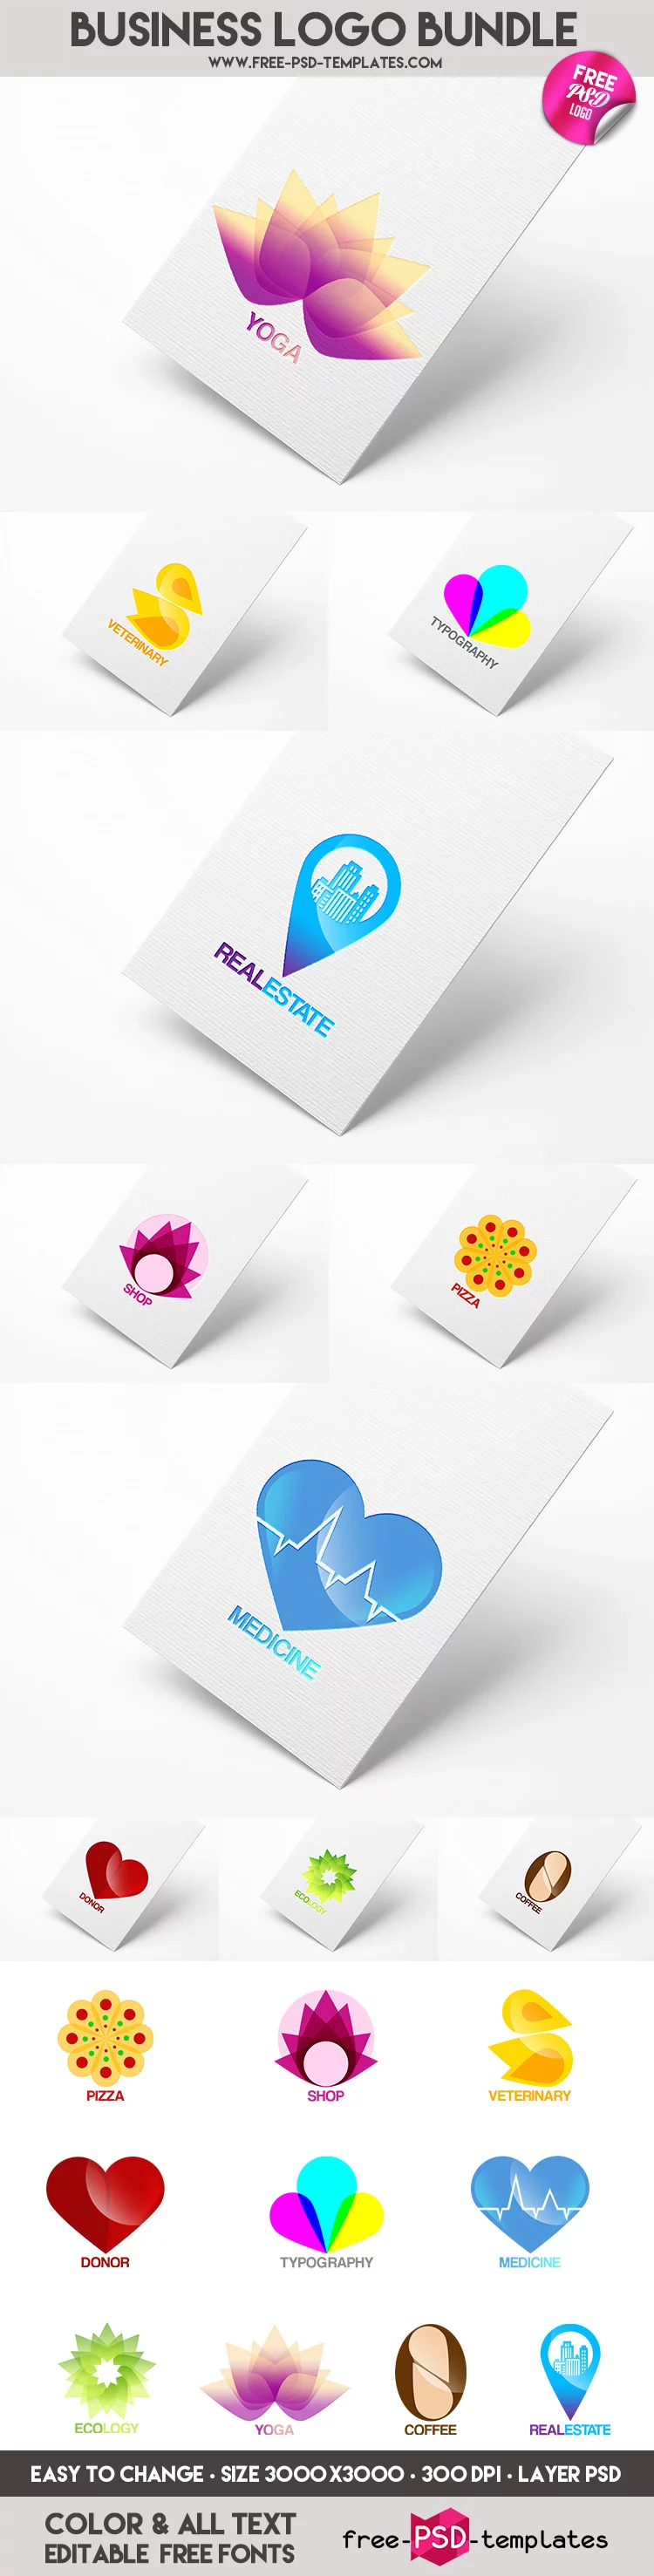 10+ Free Business Logo Templates Design